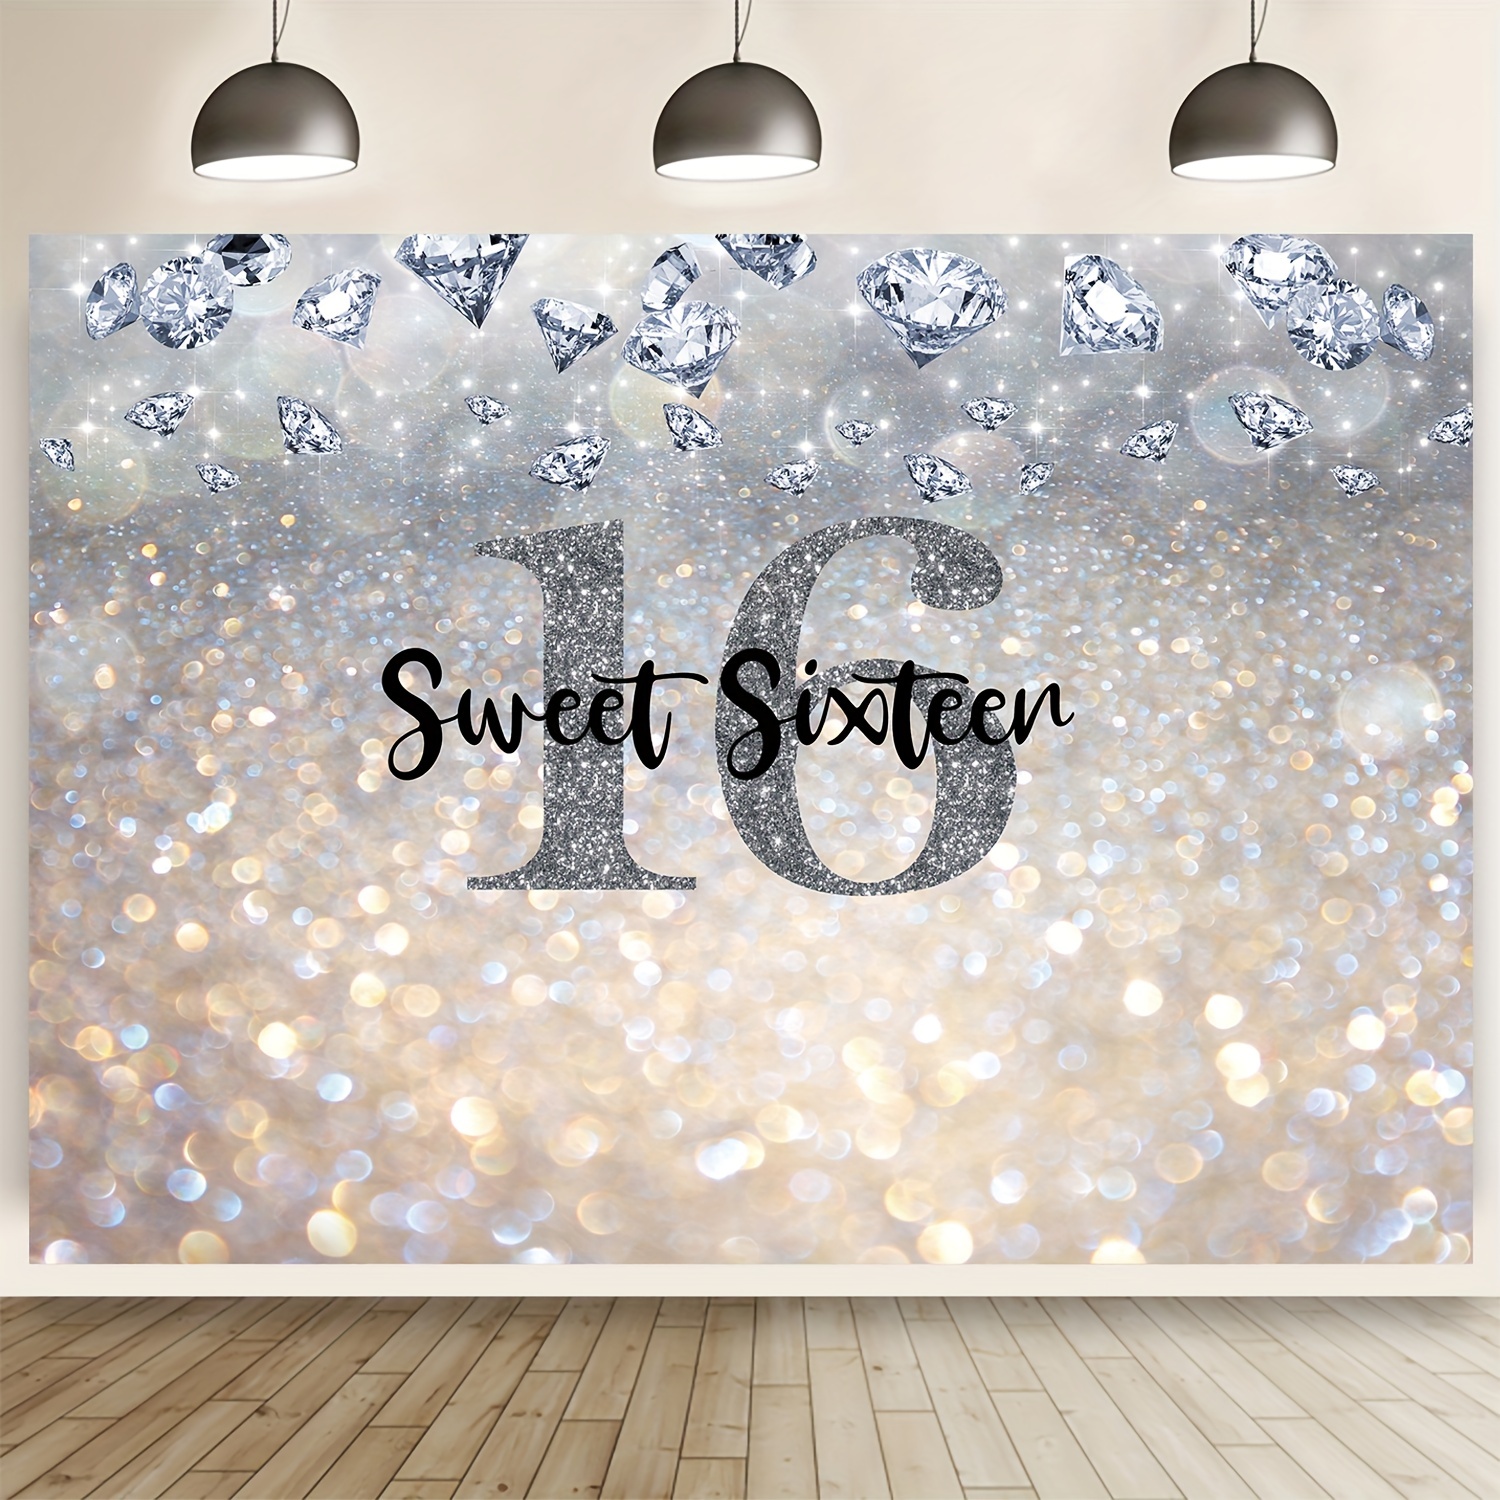 Sweet 16 Birthday Backdrop Banner, Sweet 16 Birthday Decorations